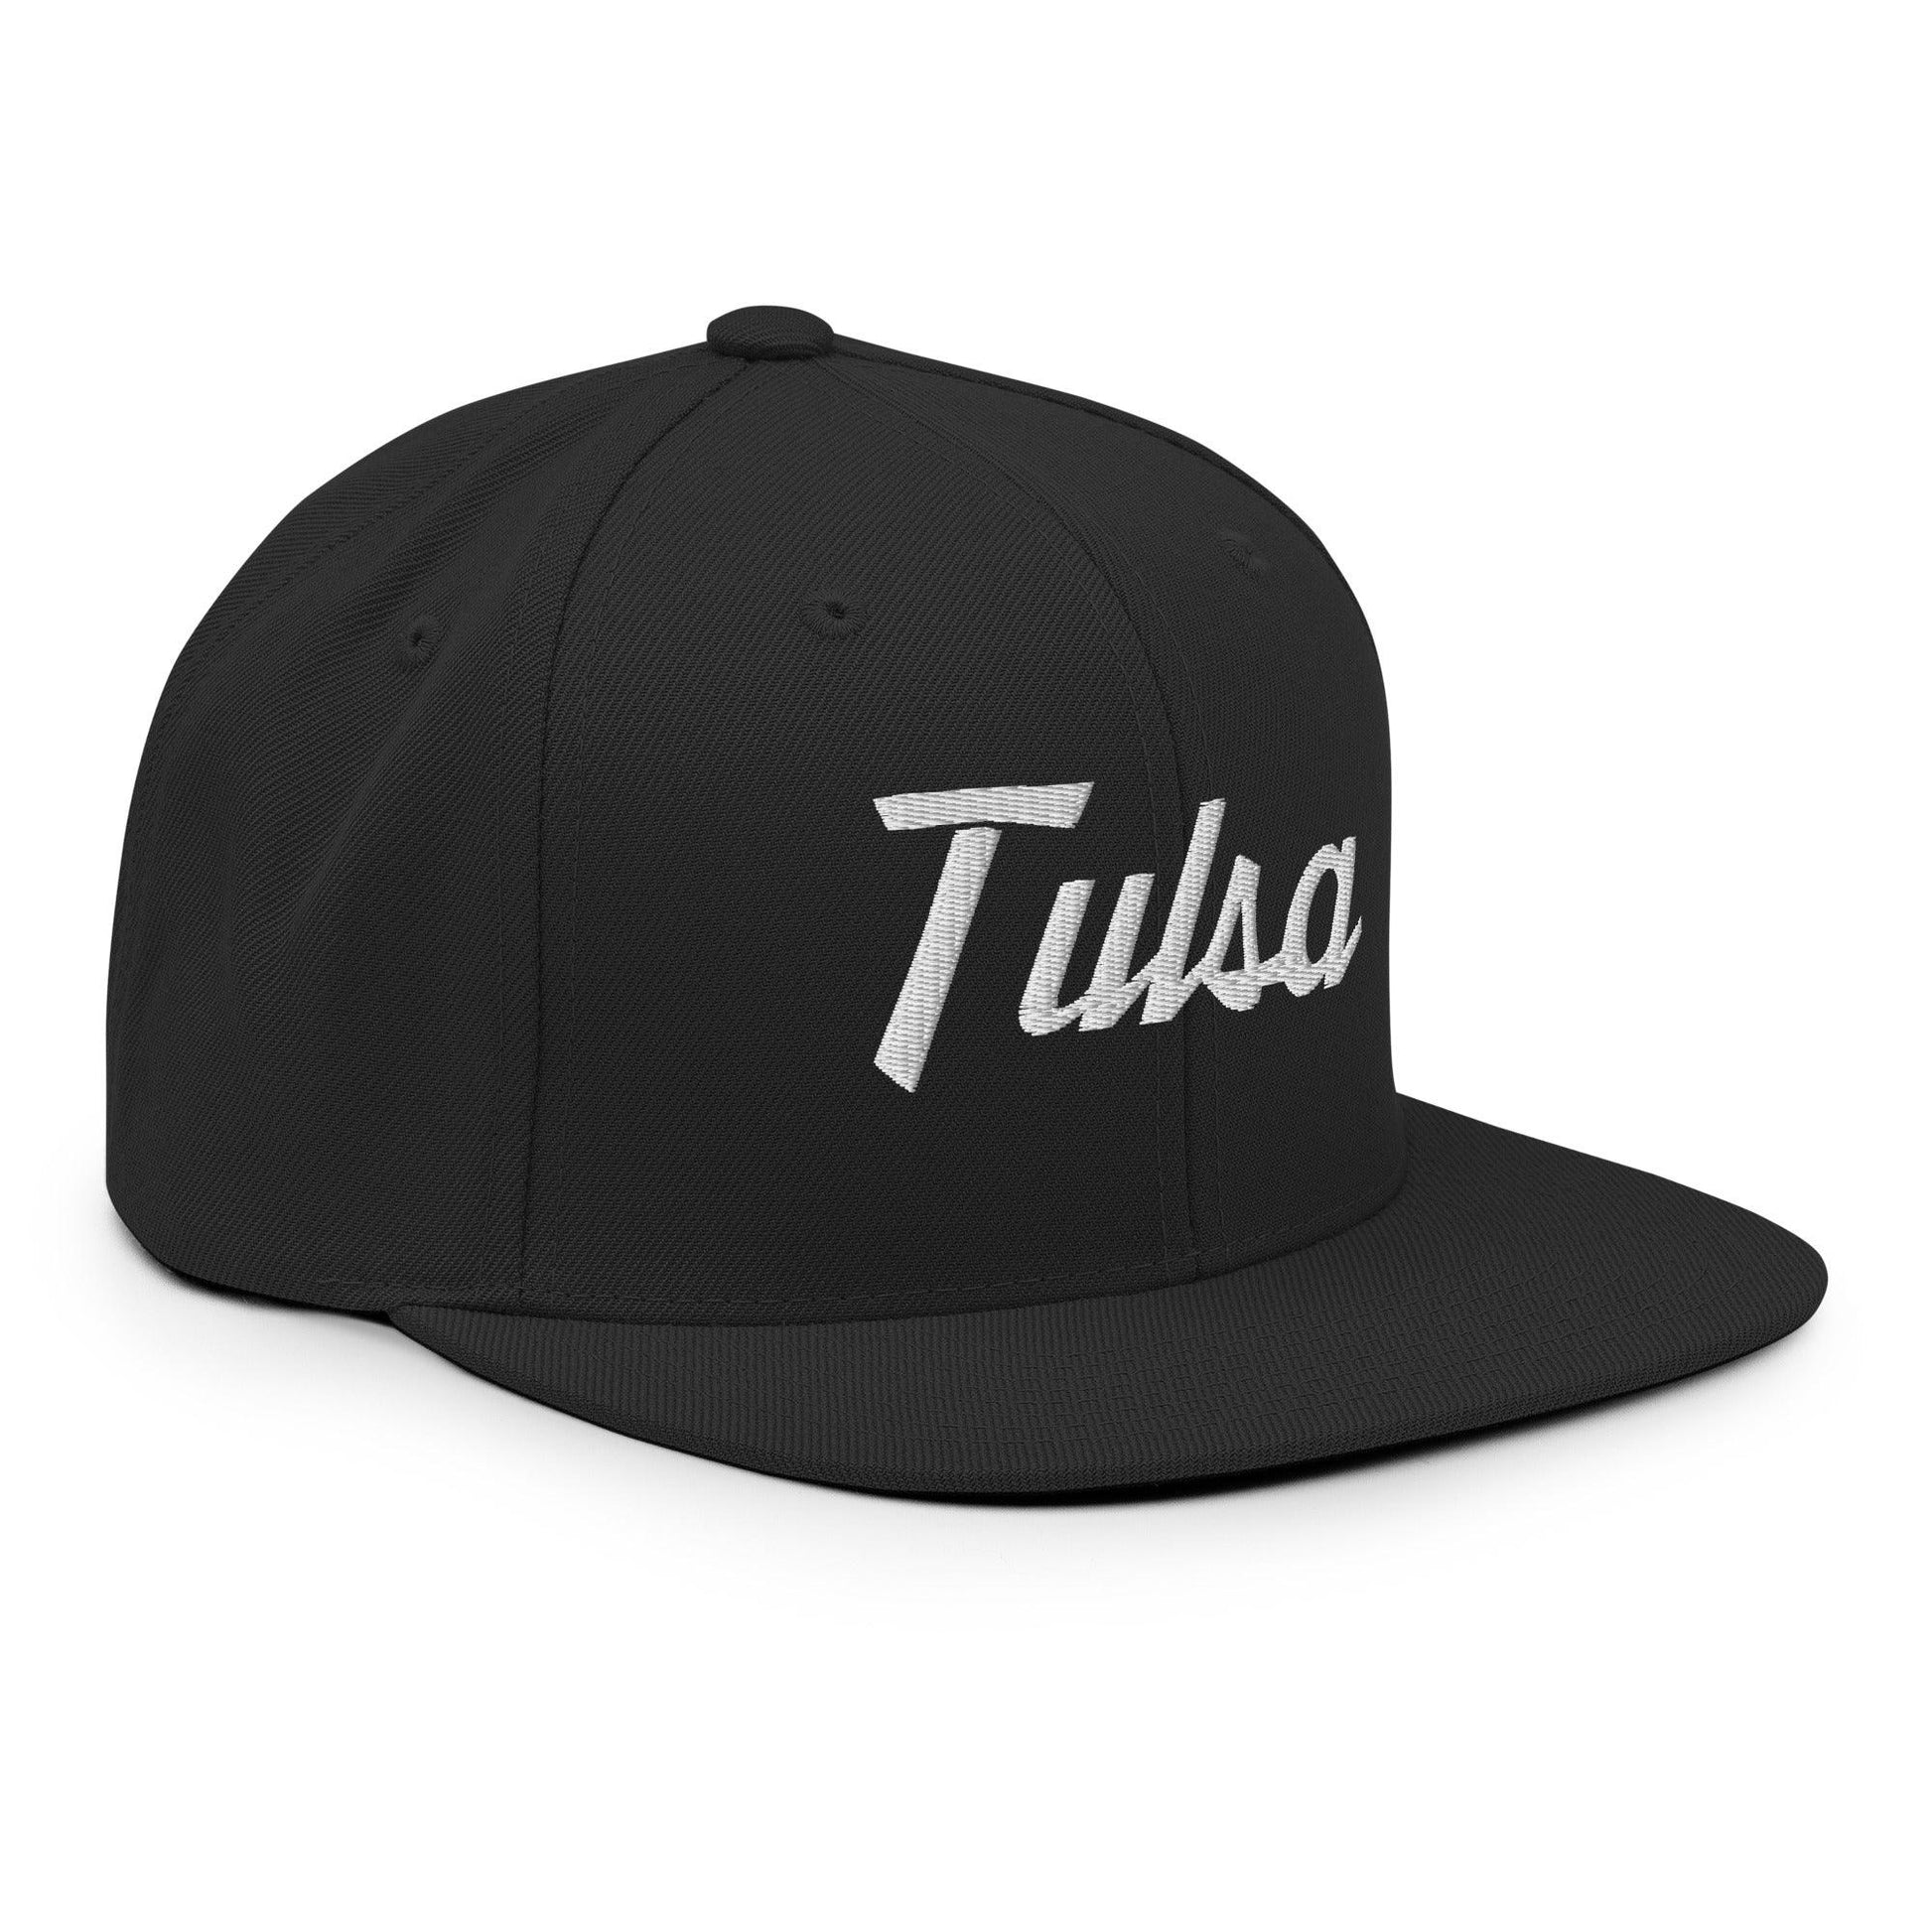 Tulsa Vintage Sports Script Snapback Hat Black